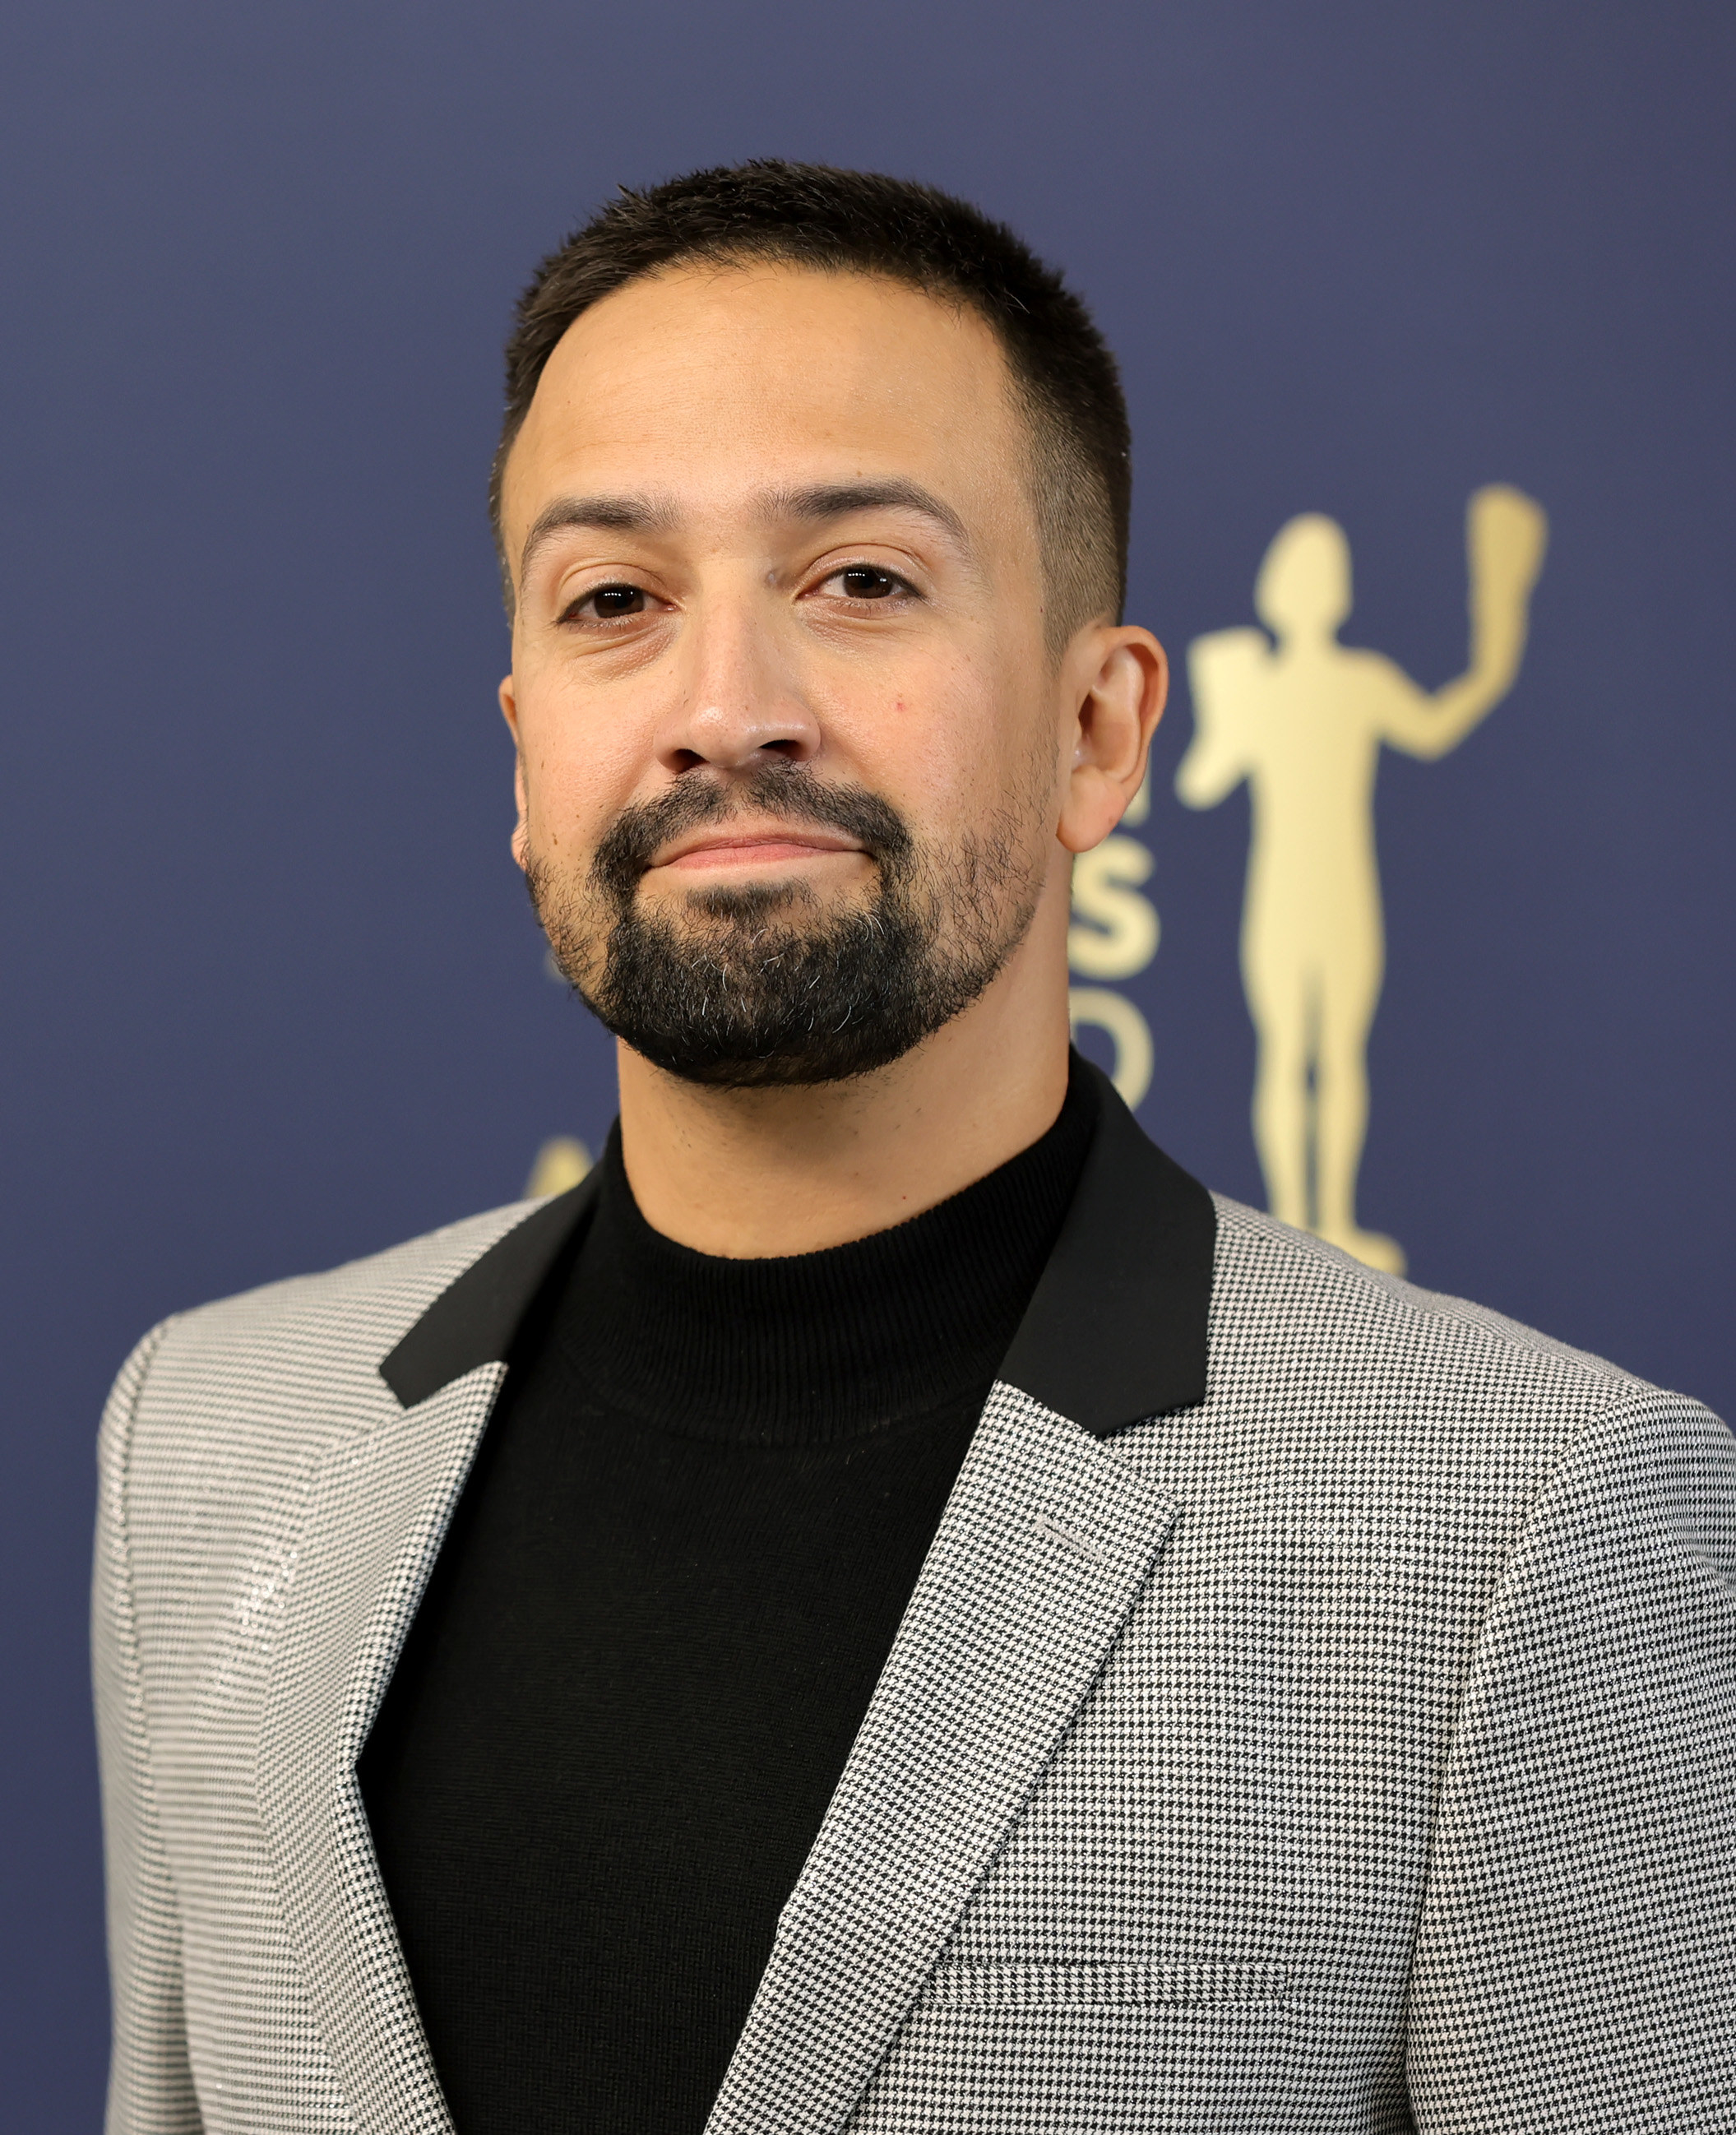 Lin-Manuel Miranda poses at the Screen Actors Guild Awards in February 2022